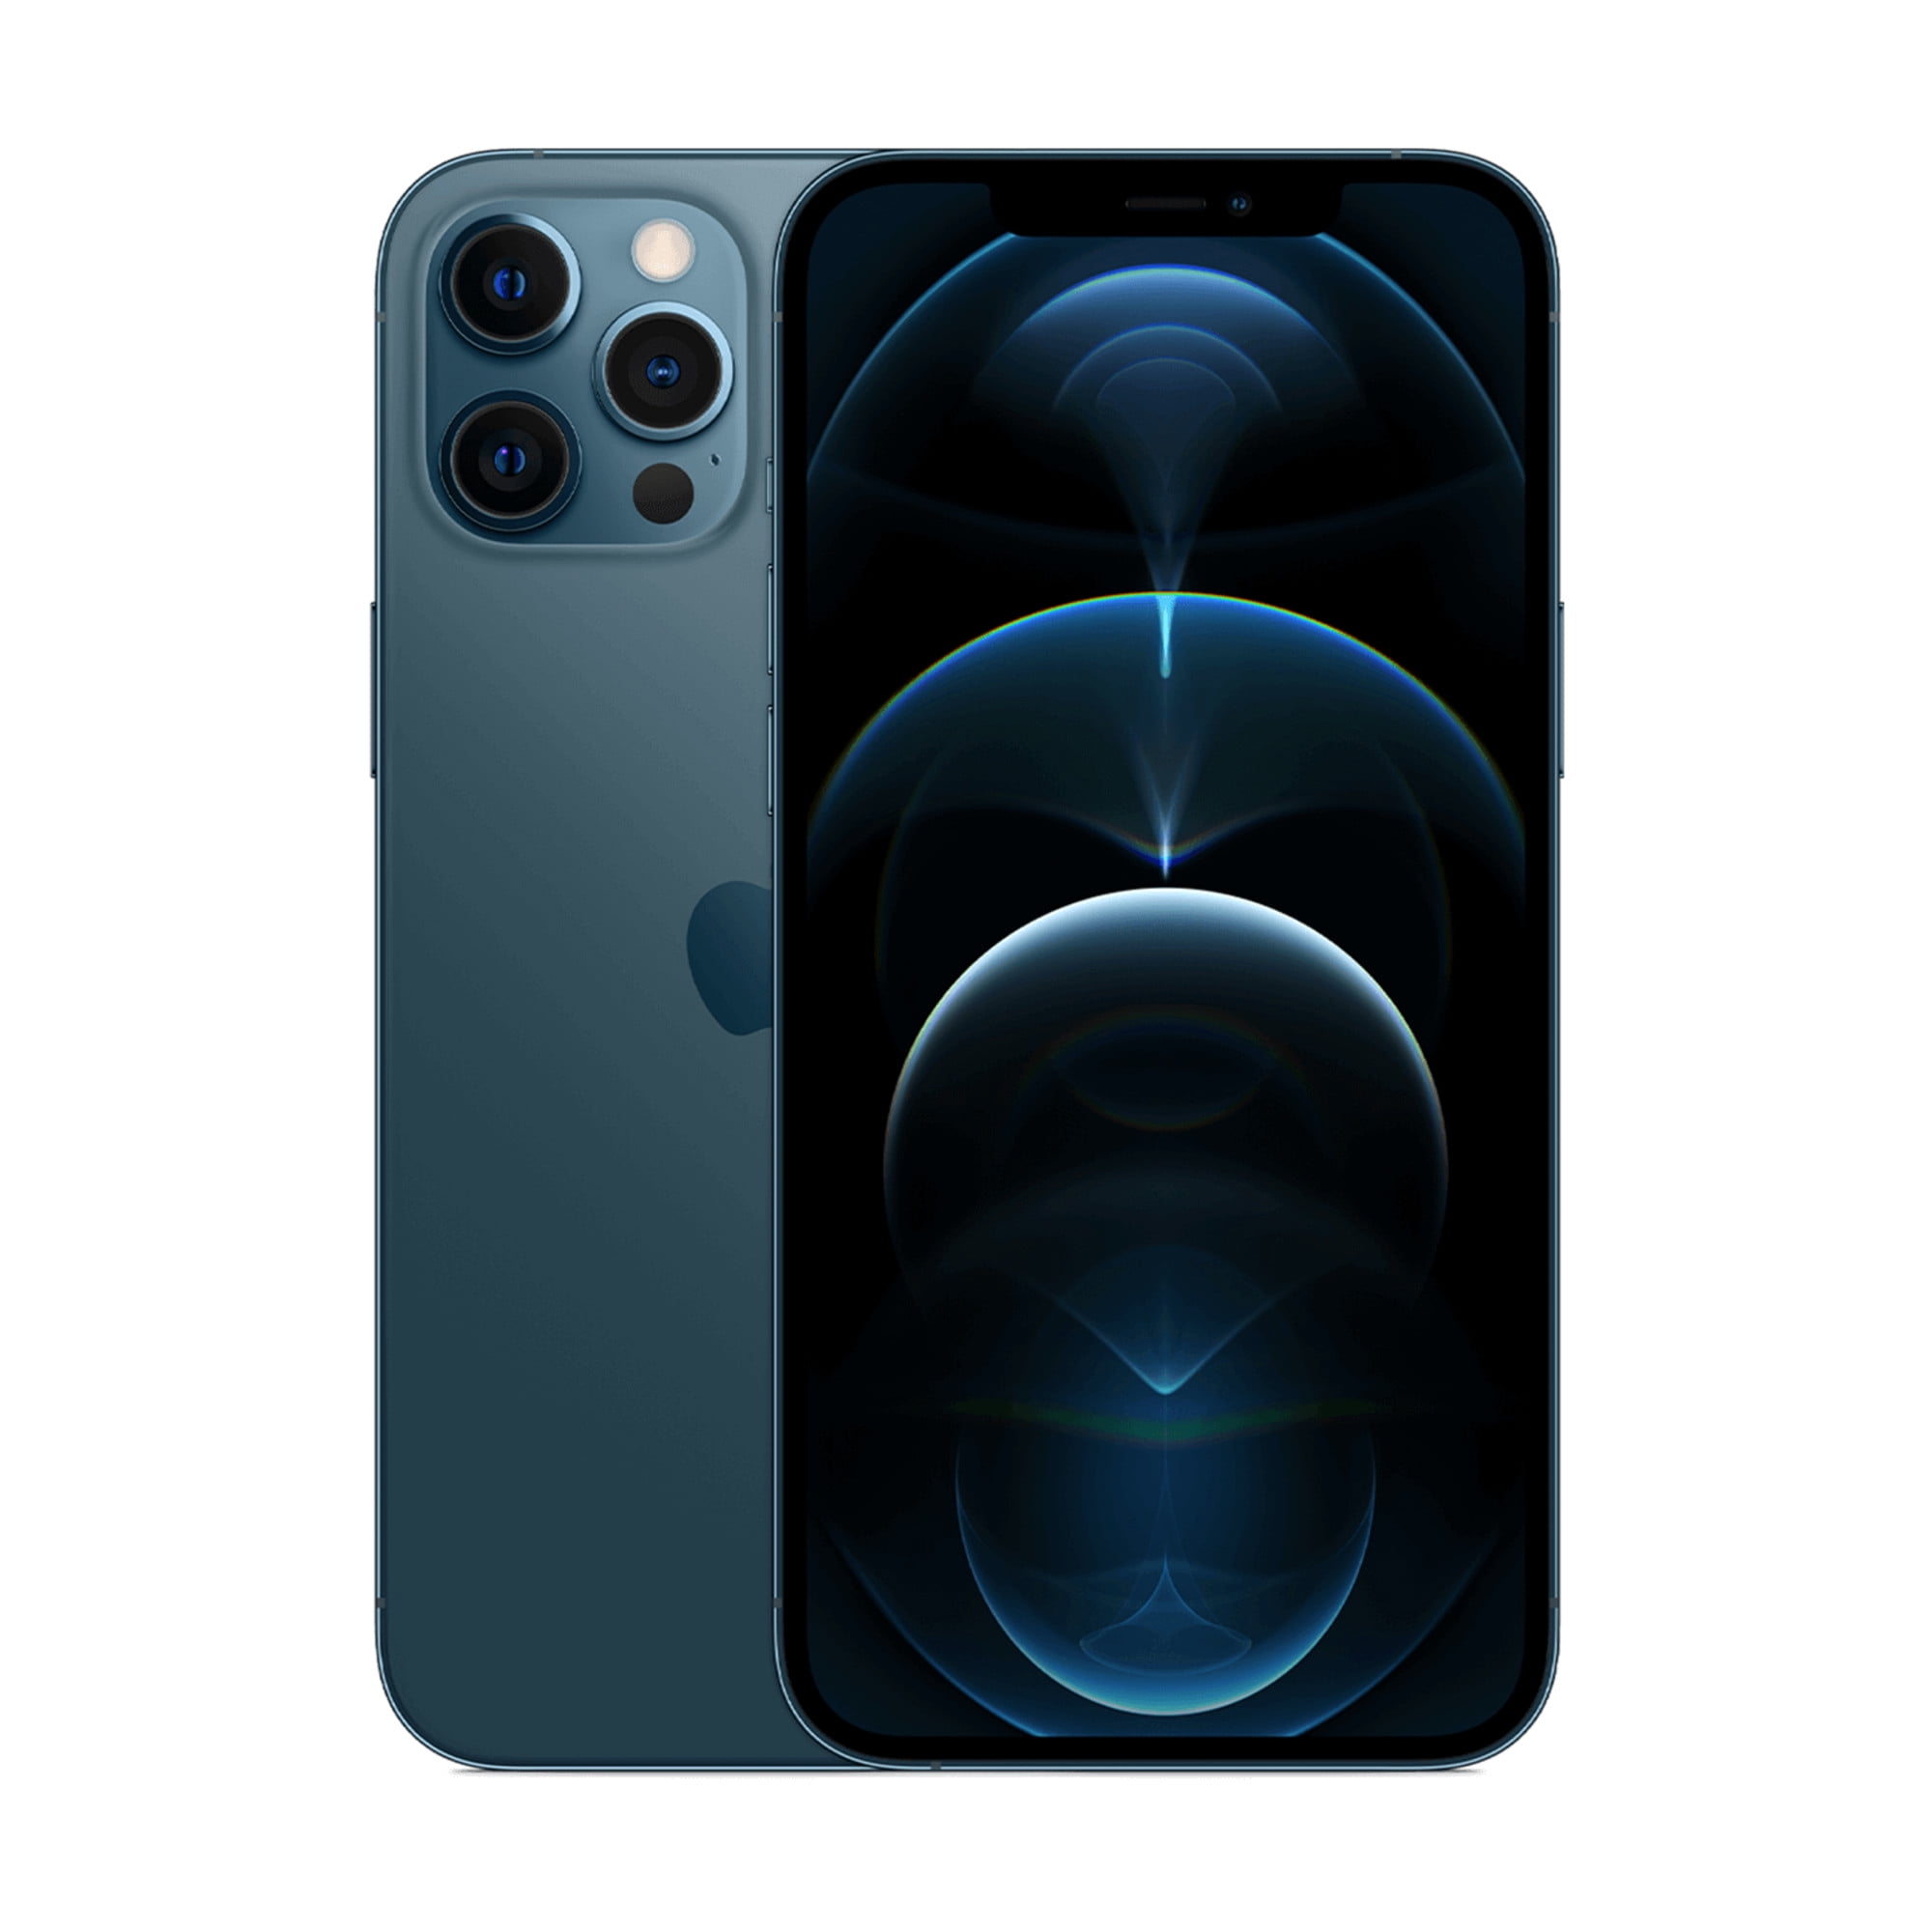 Apple iPhone 12 Pro Max 256GB Gsm/cdma Fully Unlocked - Pacific Blue